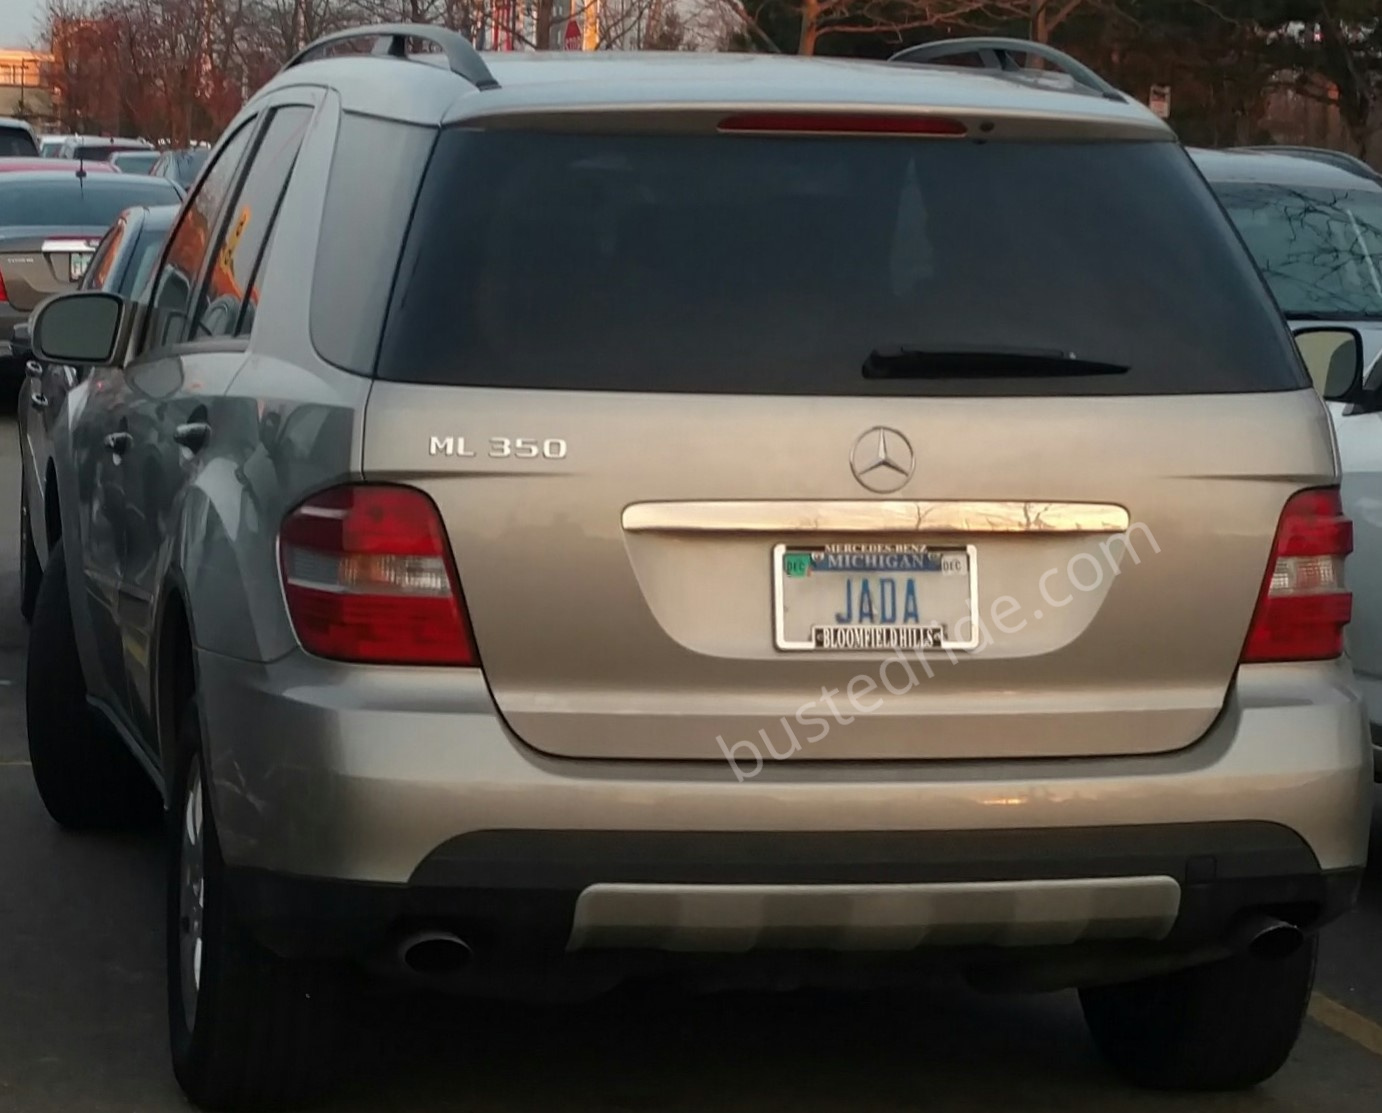 JADA - Vanity License Plate by Busted Ride